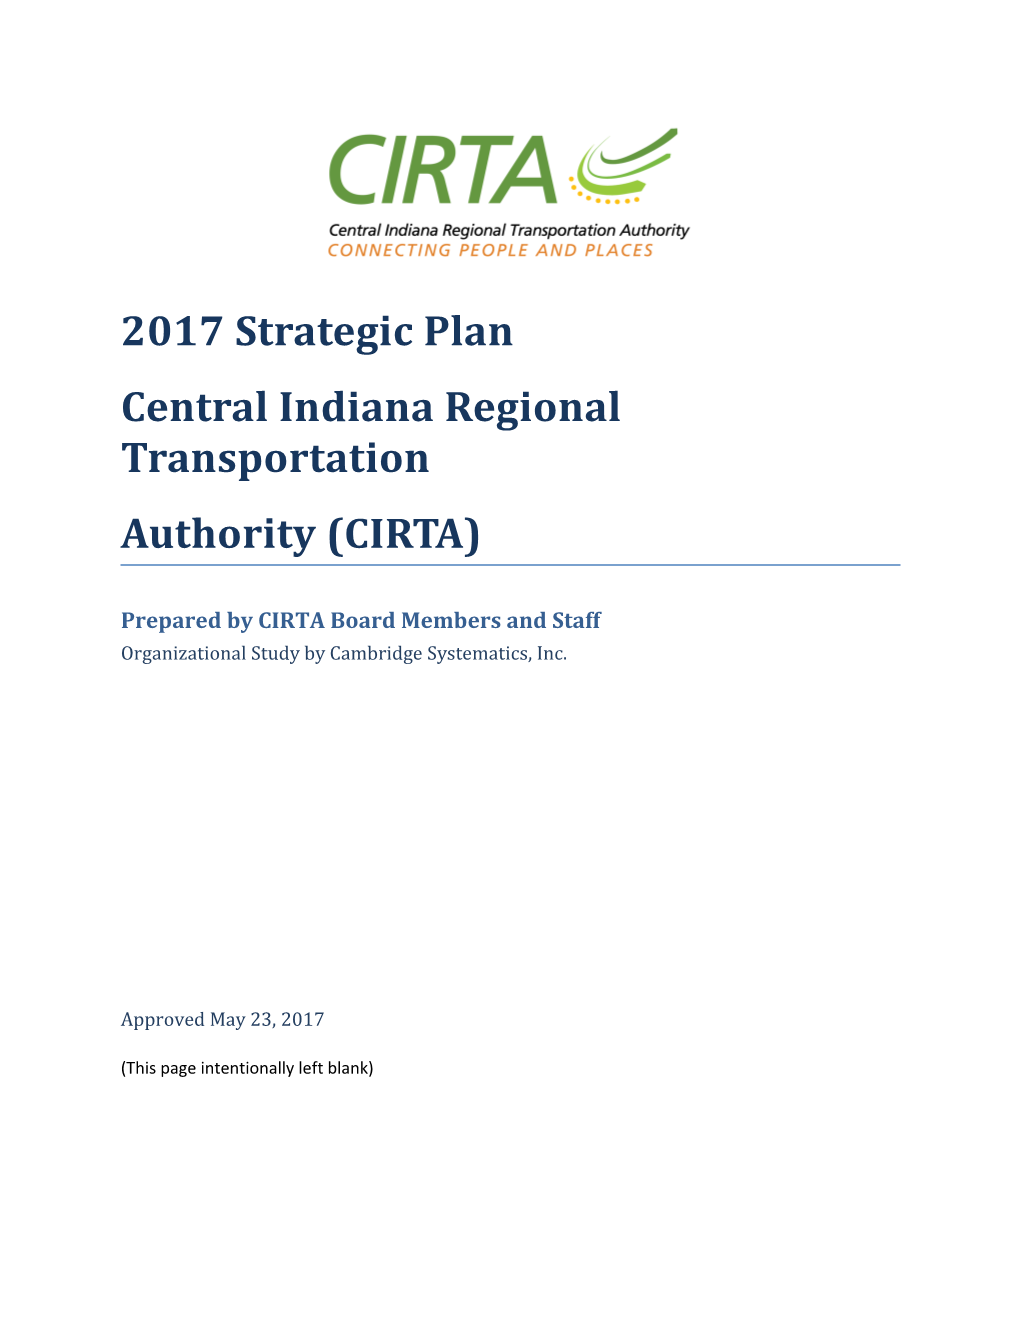 Prepared by CIRTA Board Members and Staff